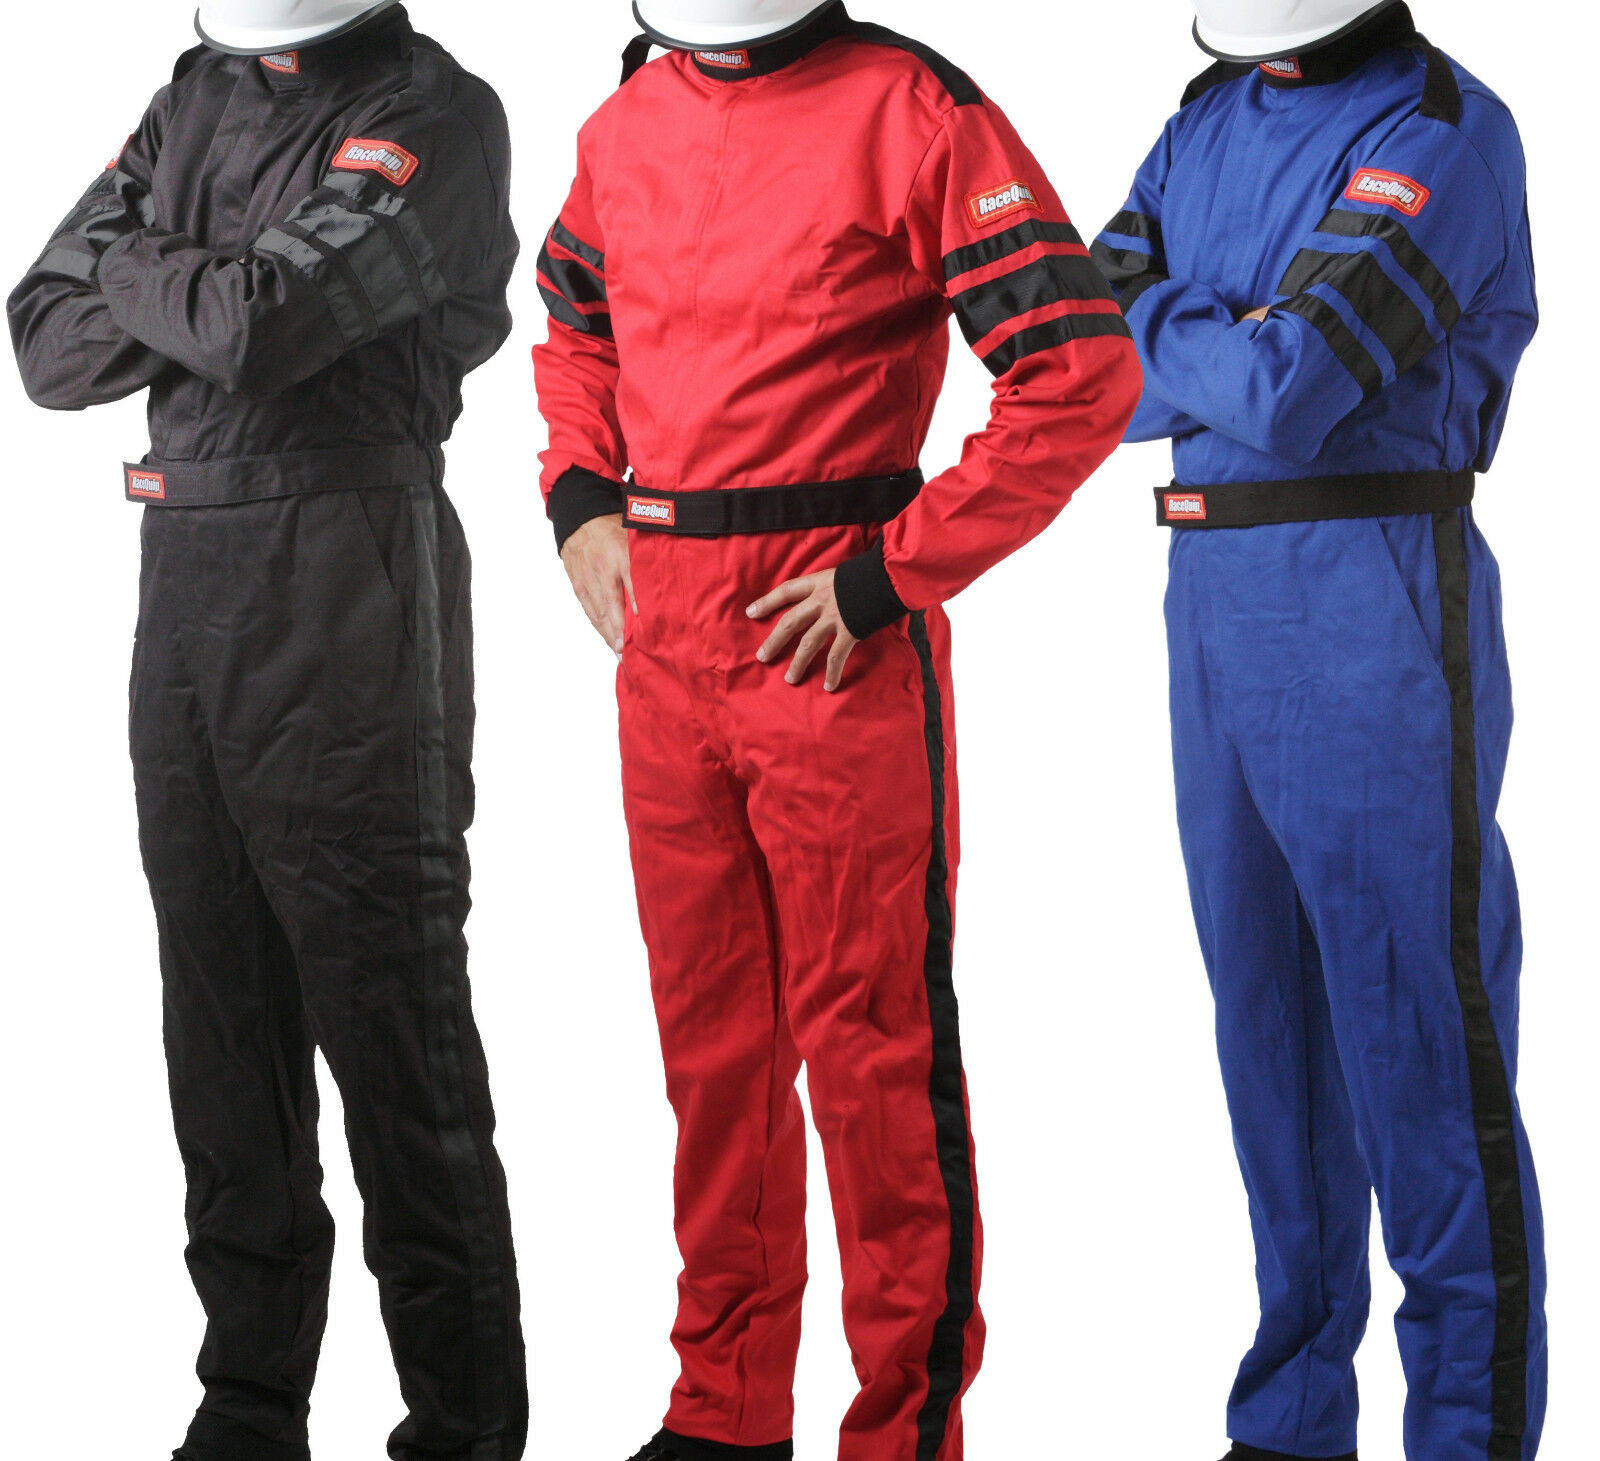 Racequip - 110 Sfi-1 Auto Racing Suit - 1-piece Nomex Style Fire Rated Race Suit